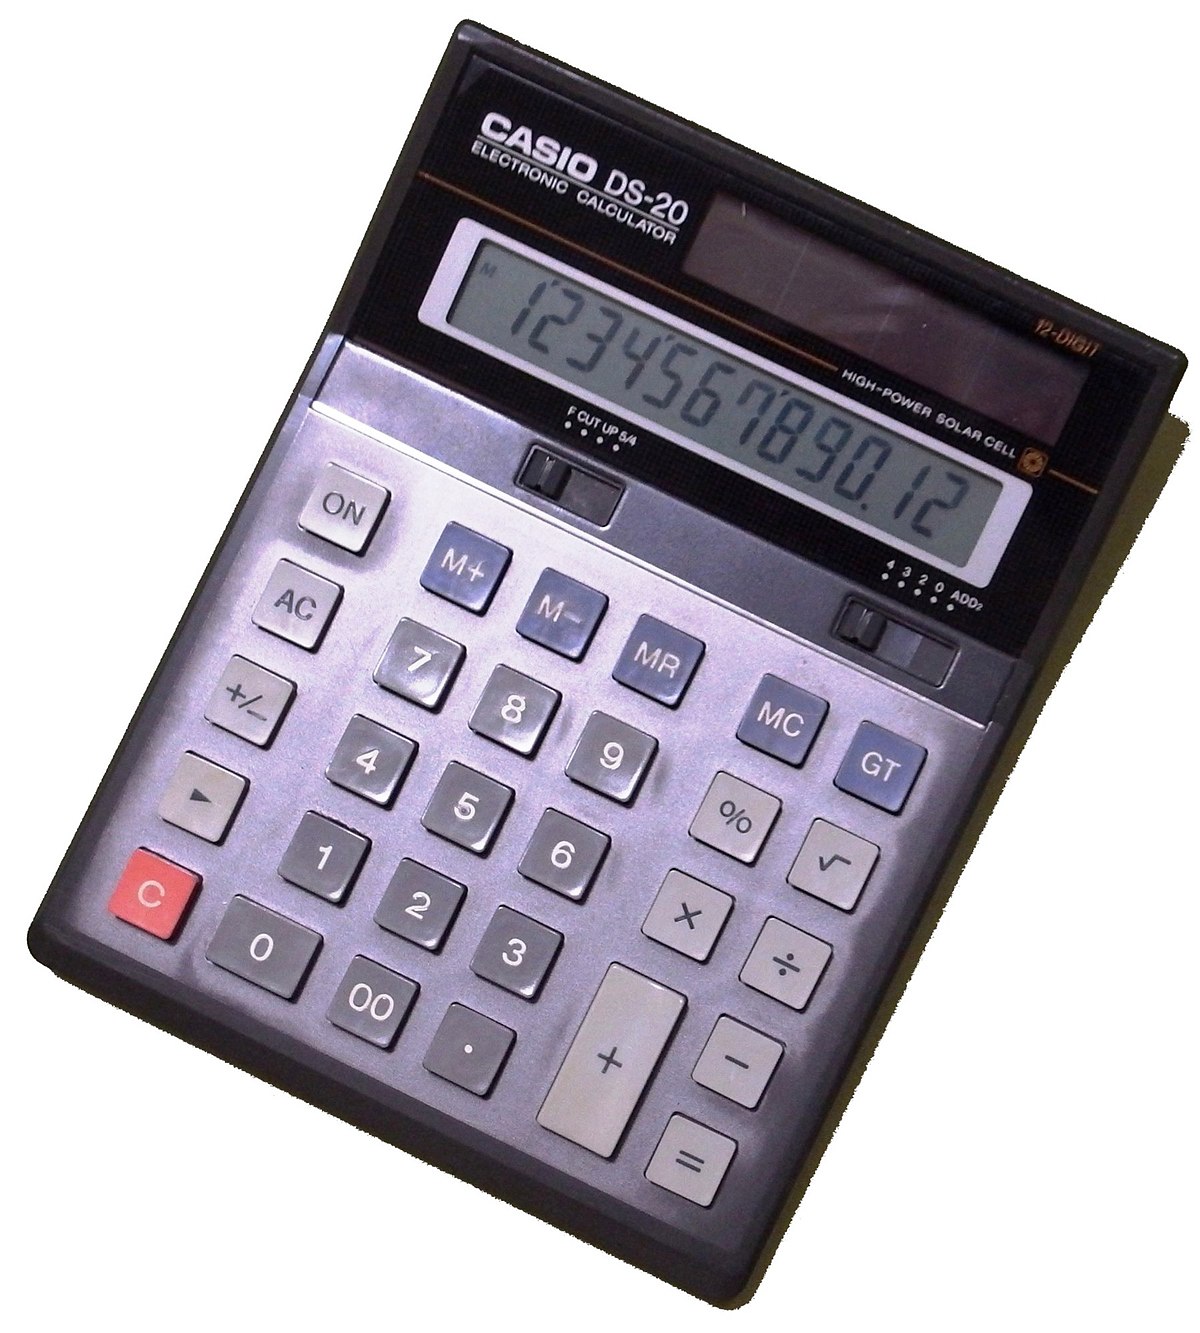 File:Casio calculator DS-20 in 201807.jpg - Wikimedia Commons